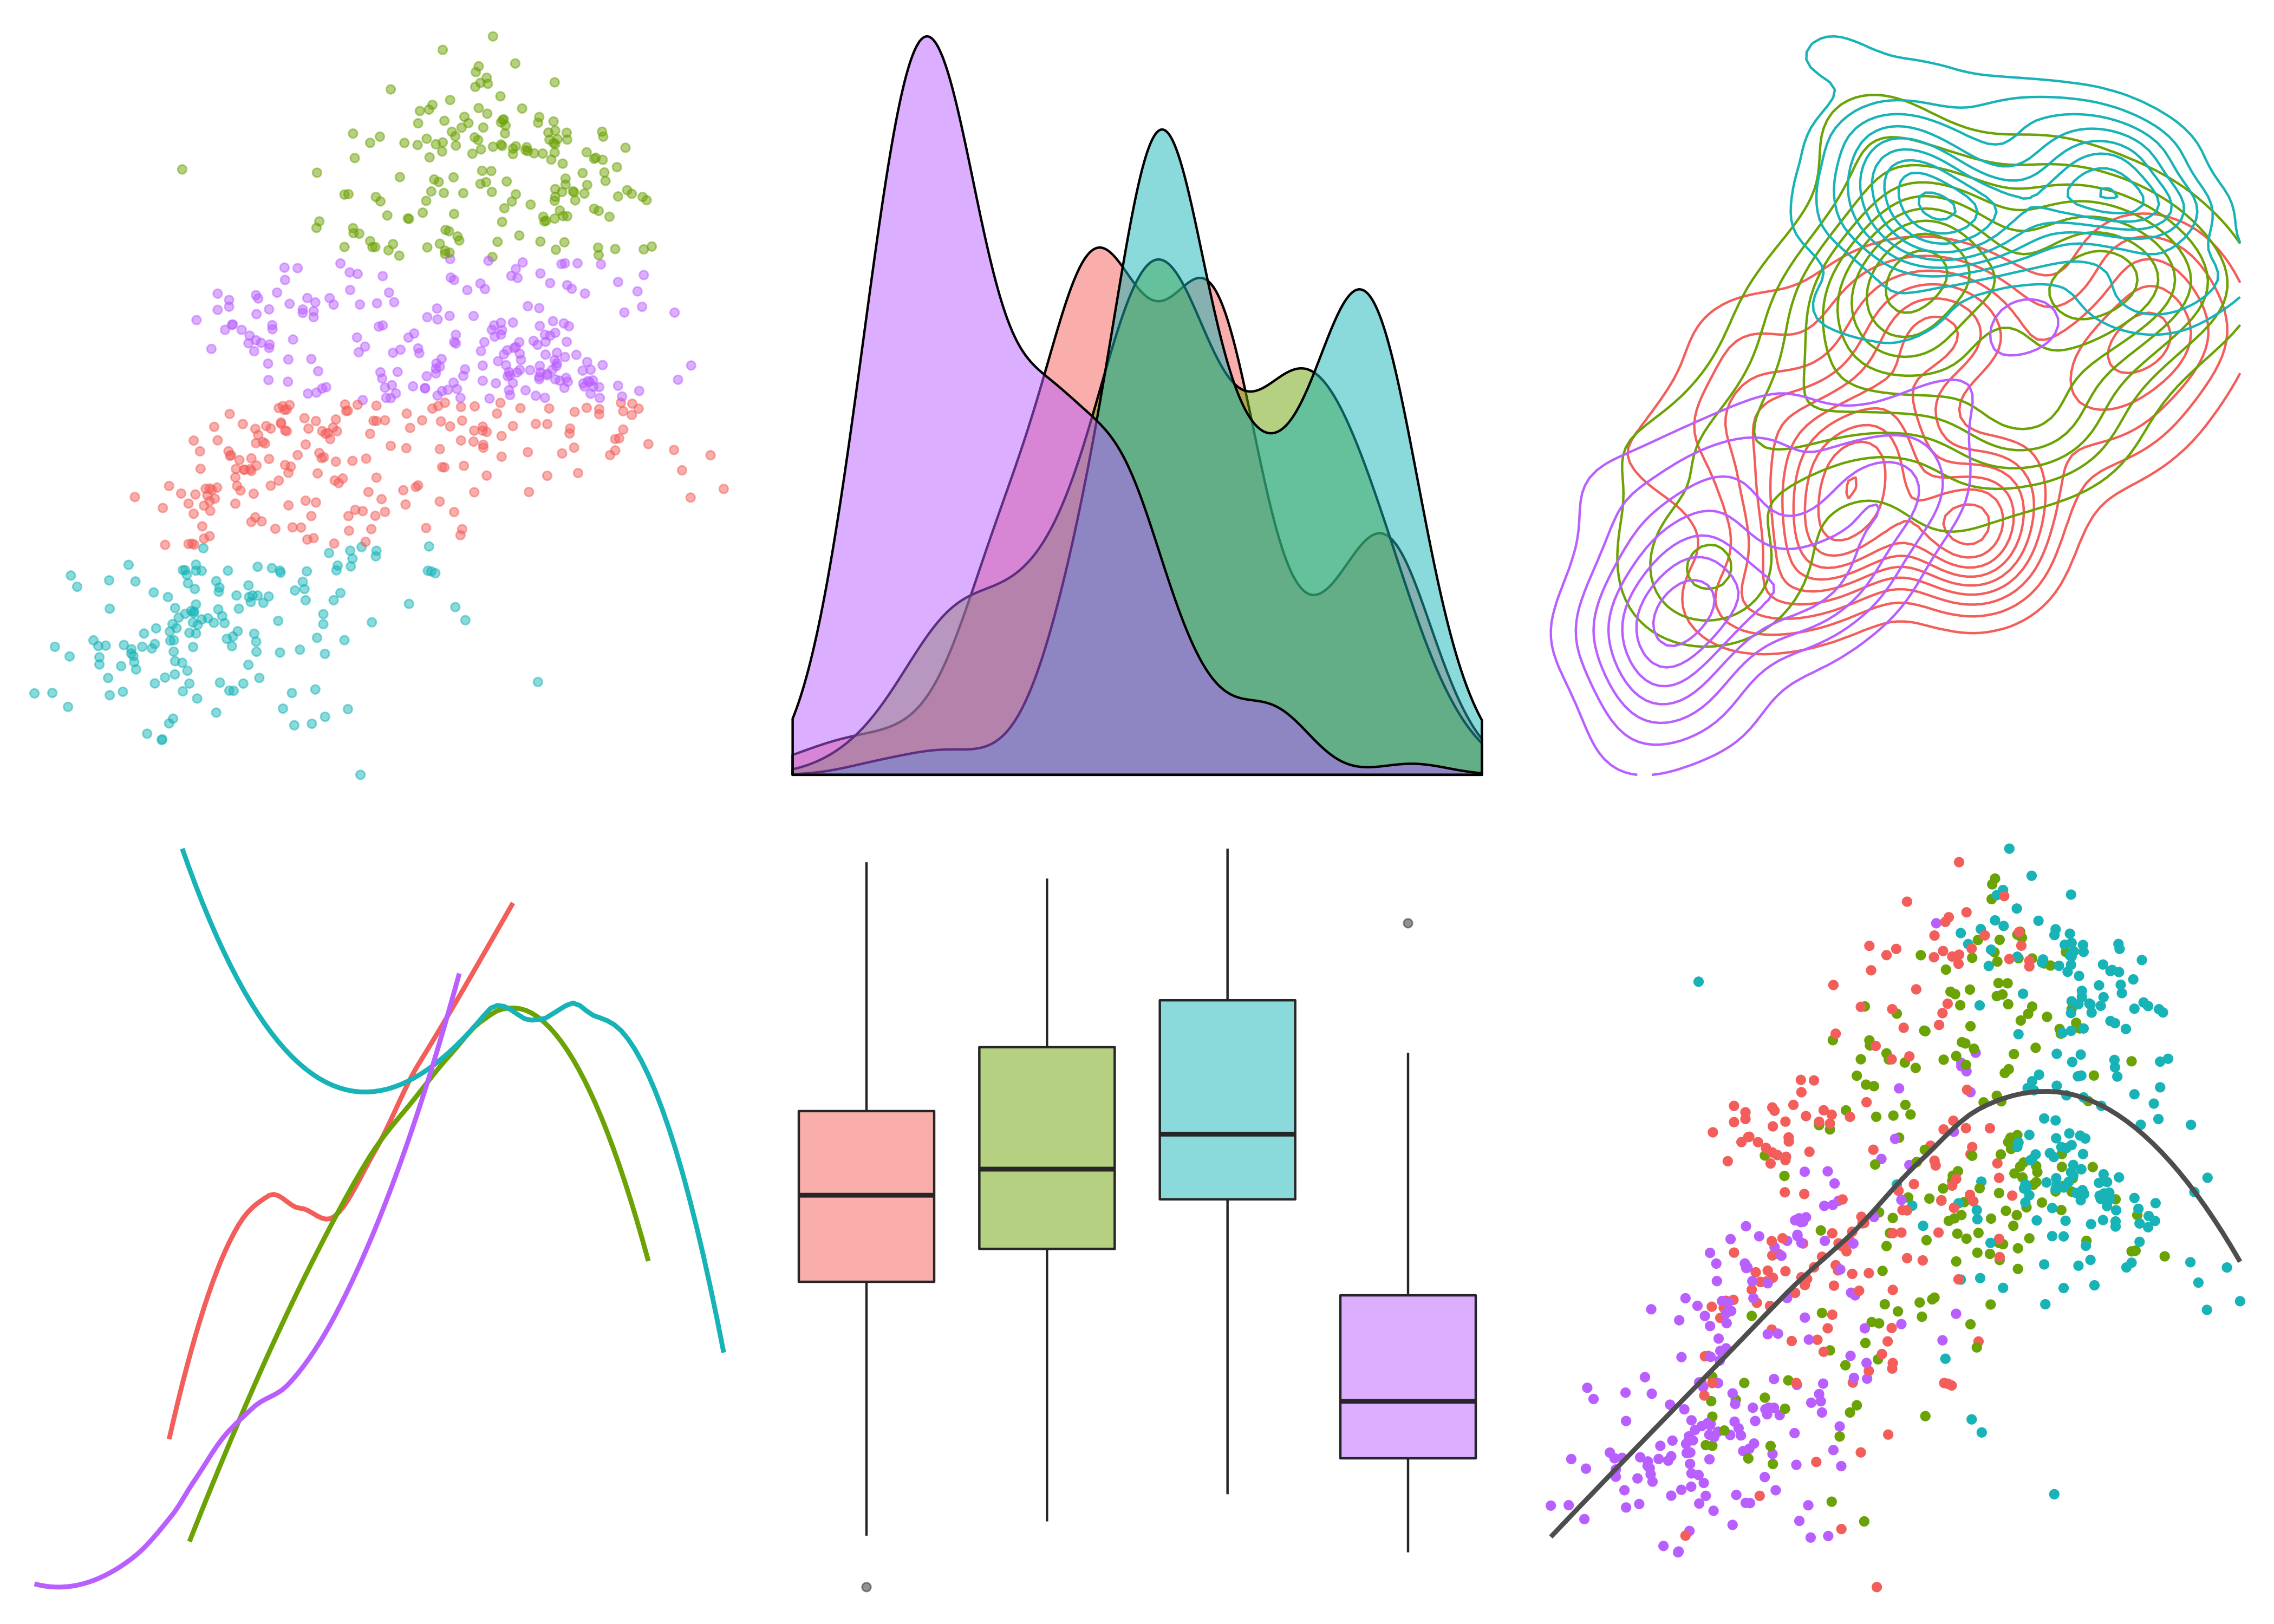 A series of six, generic data visualizations: a scatterplot, a density plot, a contour plot, a line plot, a box plot, and another scatterplot.